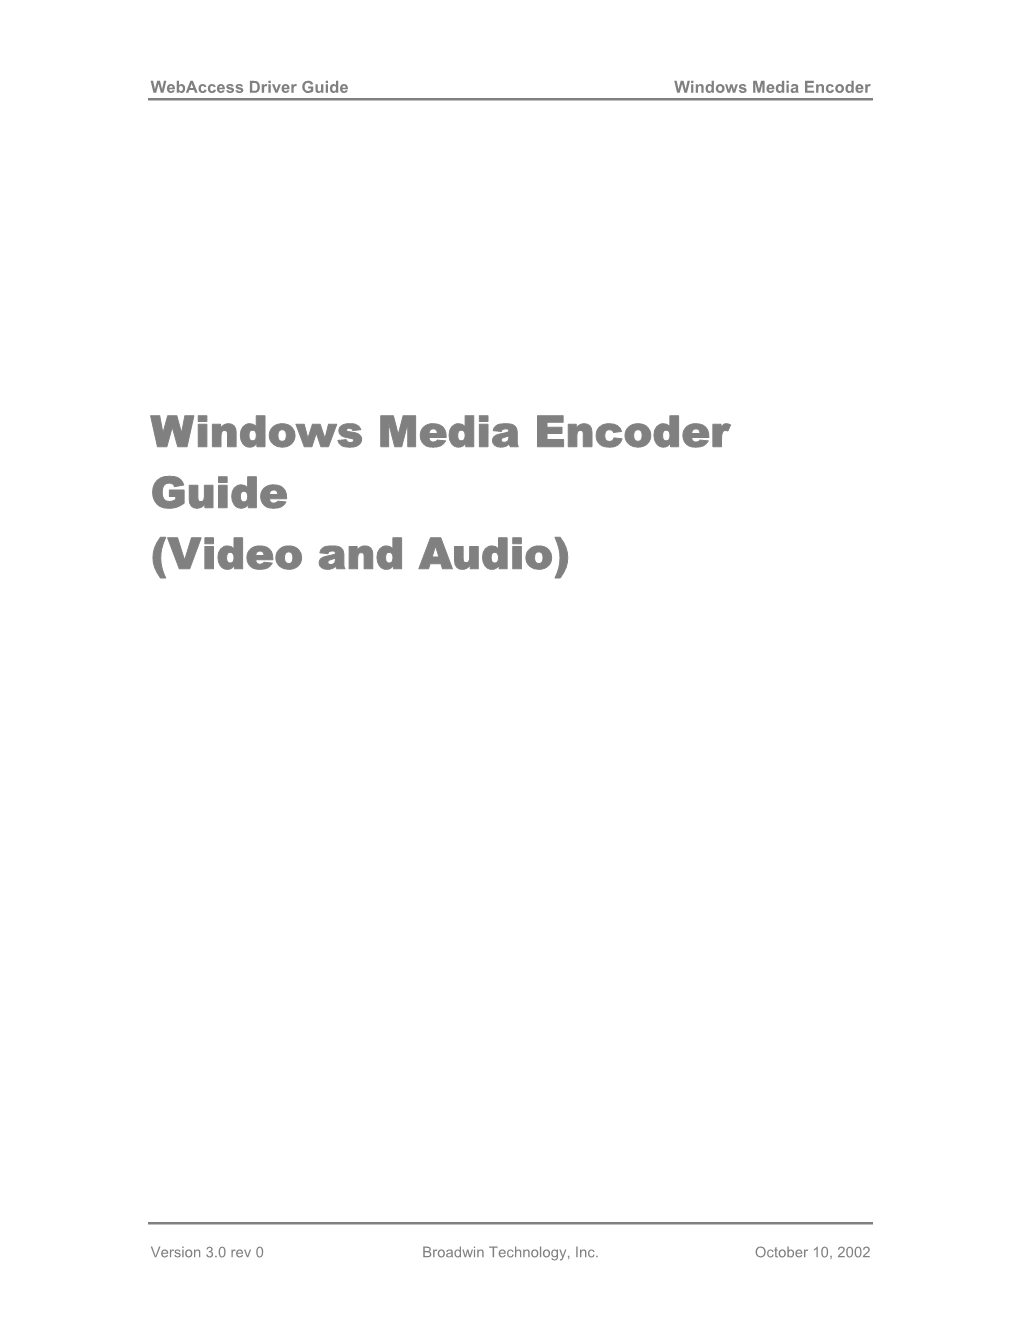 Windows Media Encoder & Webaccess Video